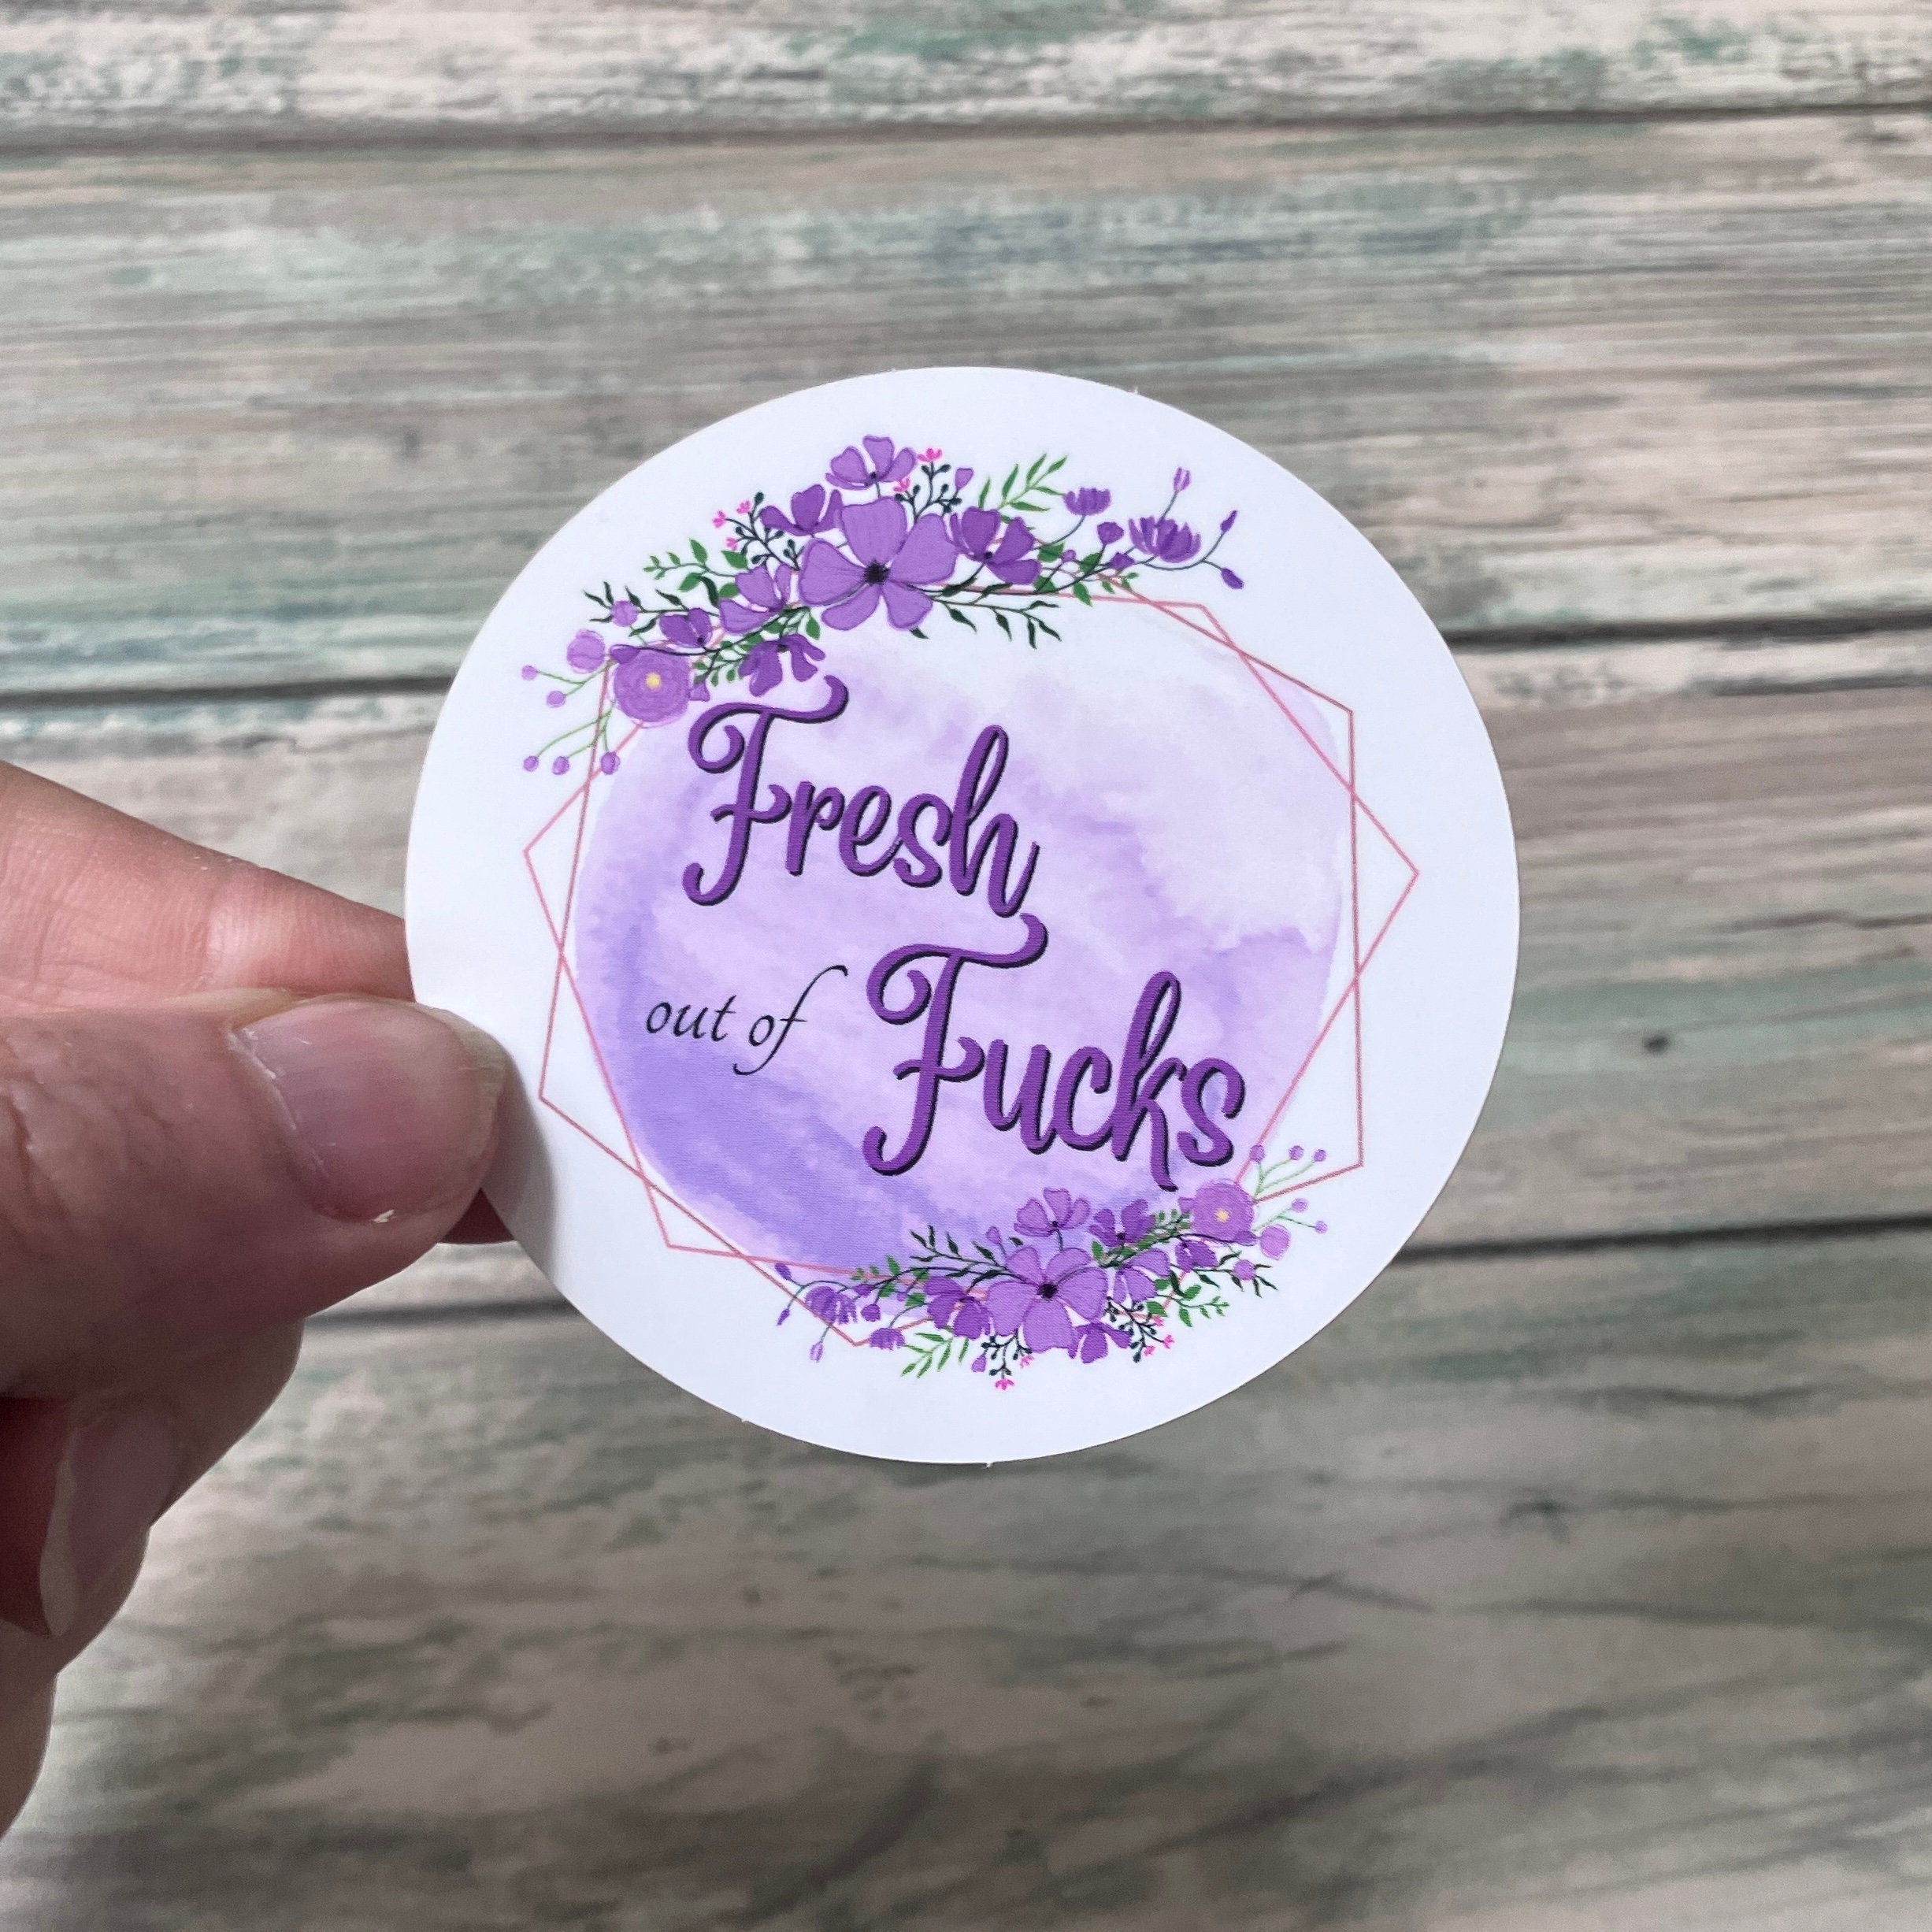 Fresh Out Of Fucks Sticker - Vinyl Sticker - Snarky Sticker - Funny Sticker